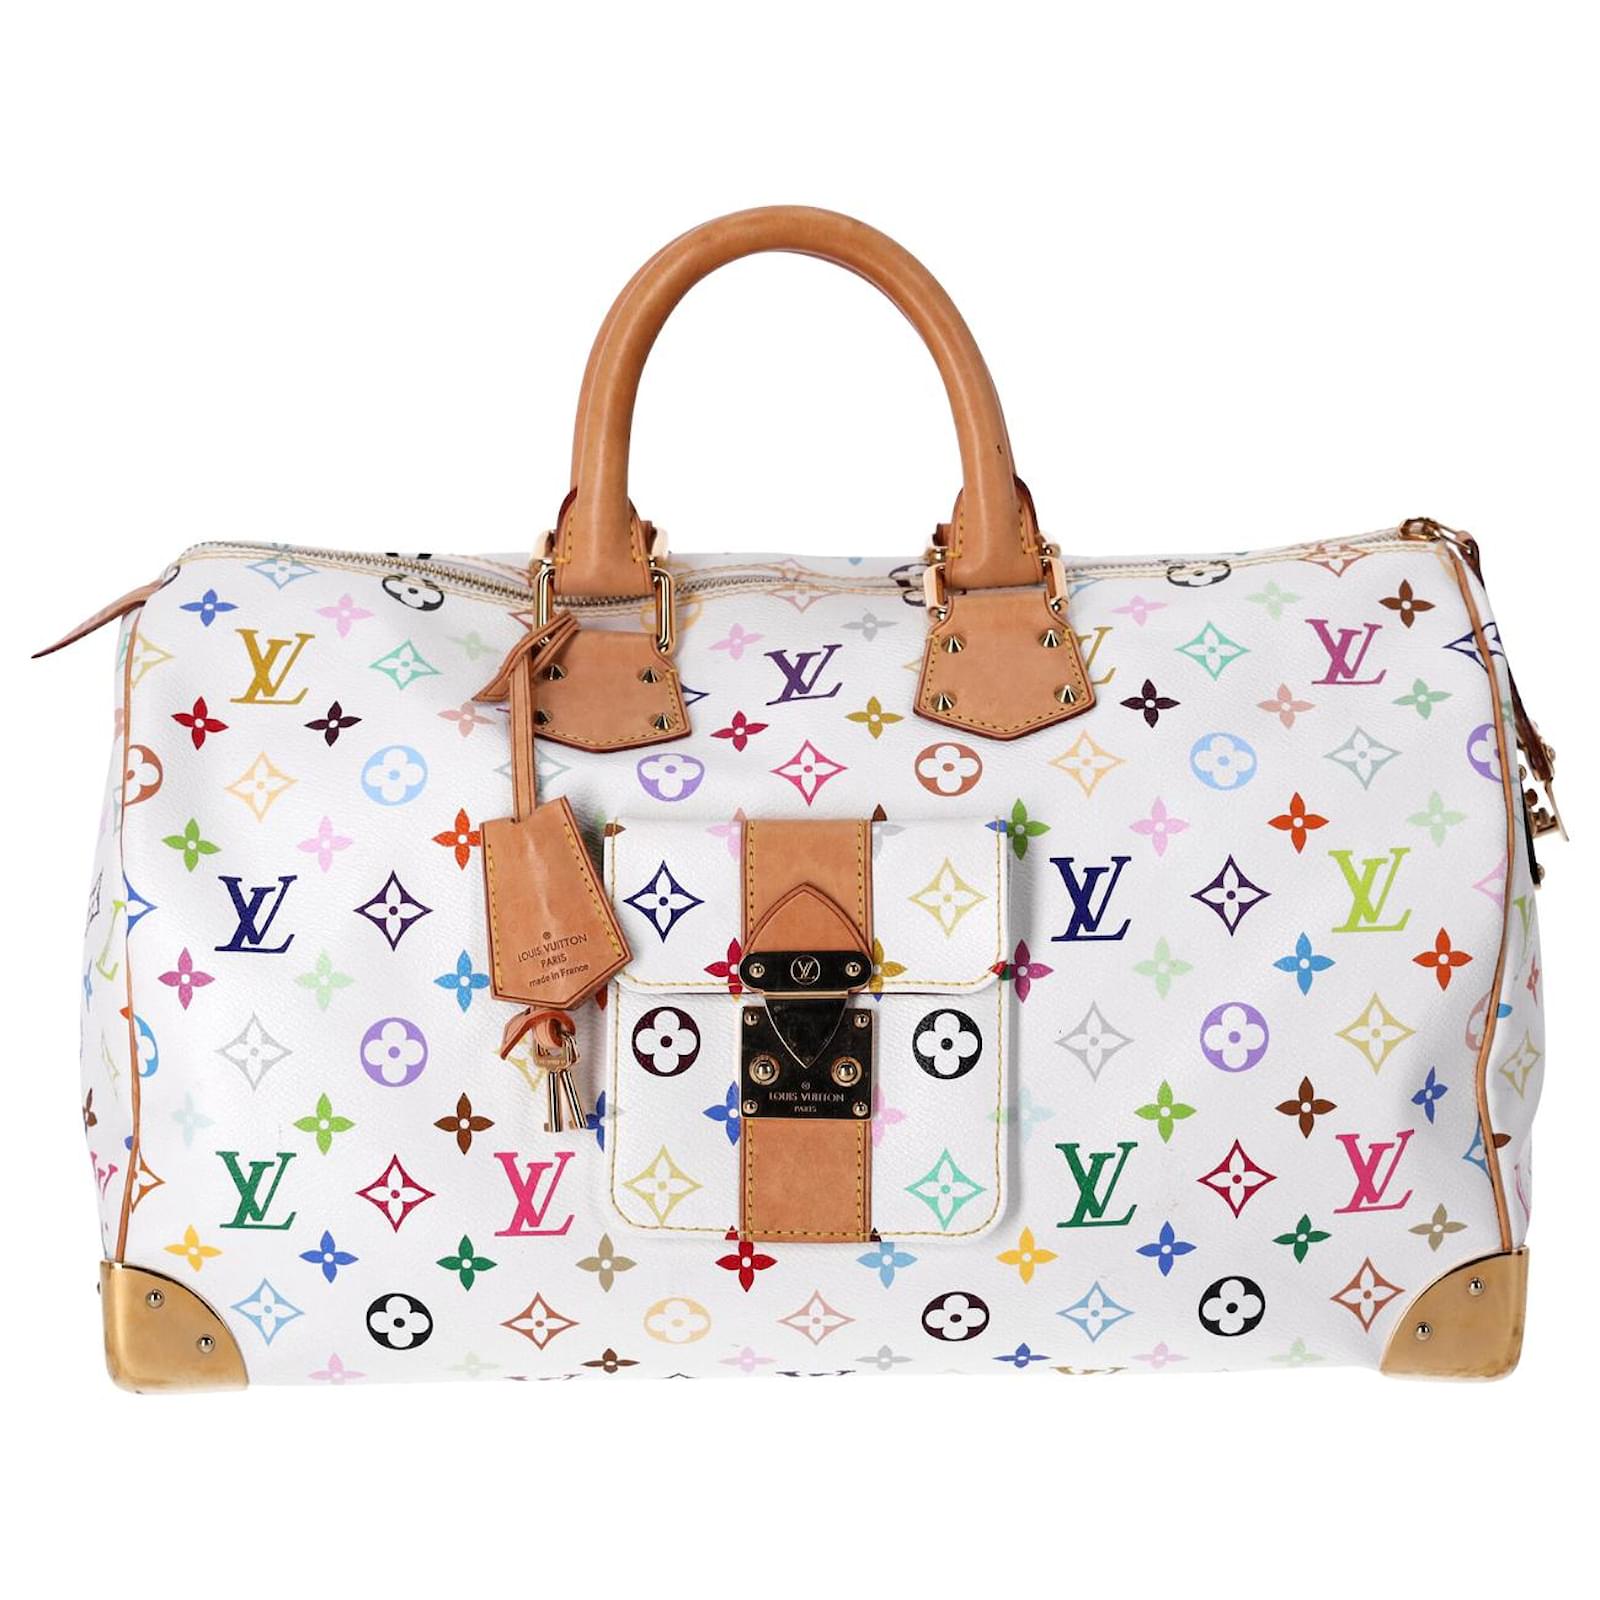 Louis Vuitton Monogram Speedy 40 Handbag